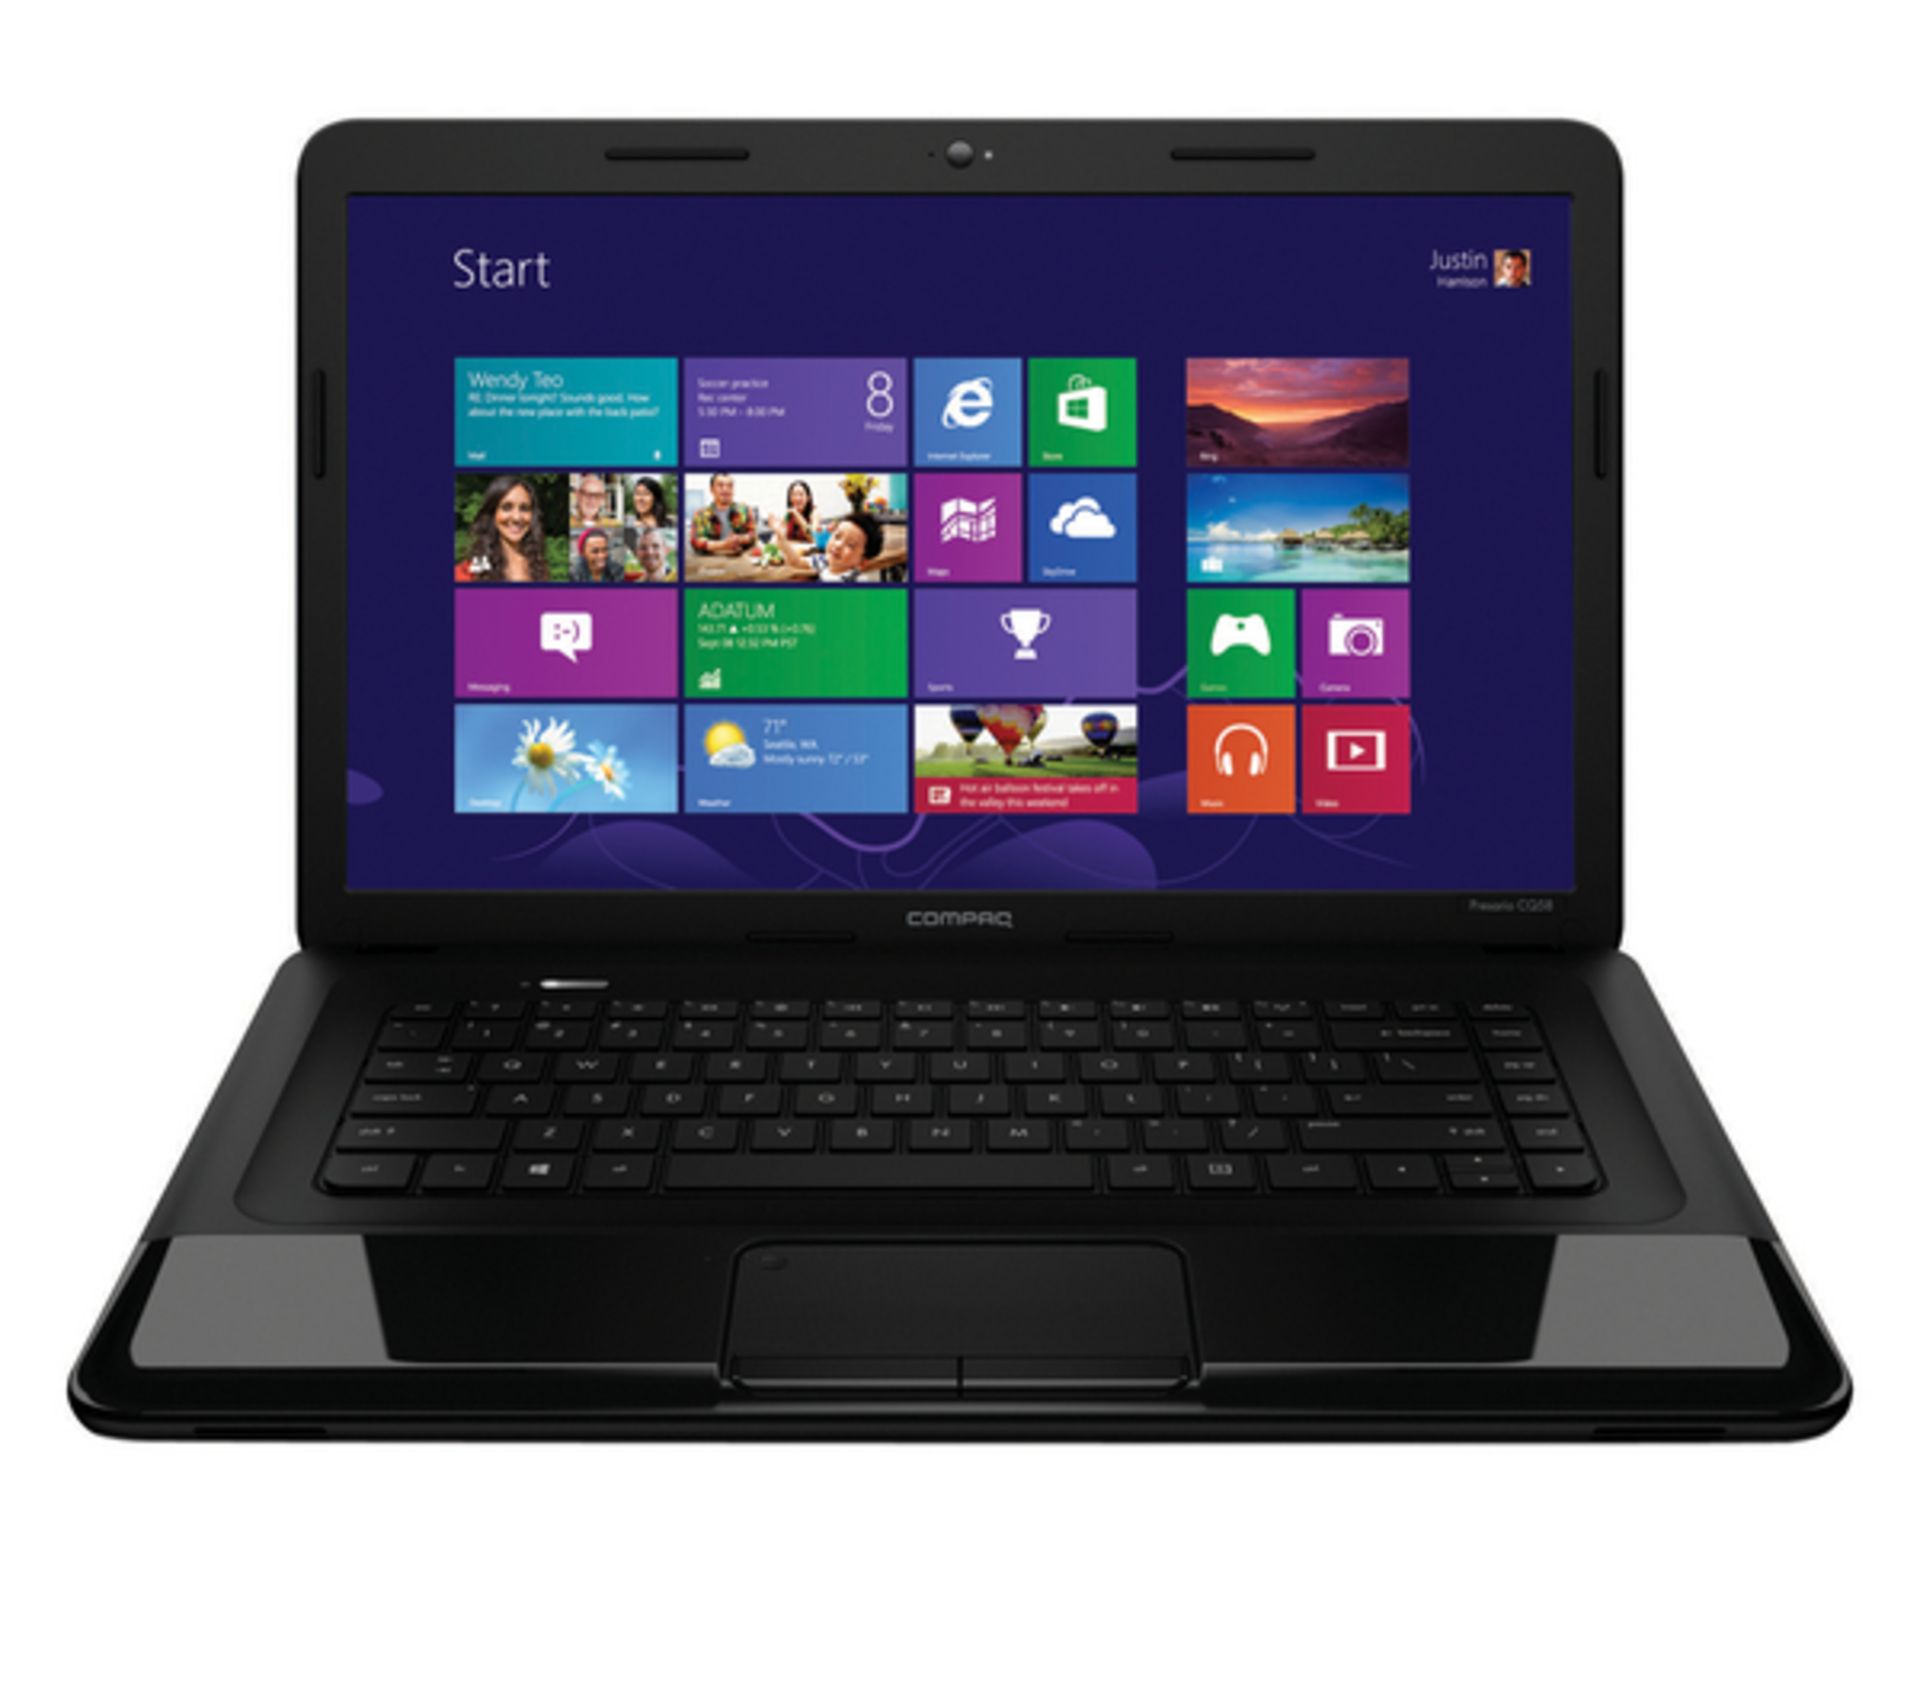 V  Grade B Compaq CQ58-331 Laptop AMD Dual Core E1-1200 (1.4Ghz) 4Gb 500 Gb WLAN DVDRW 15.6 inch